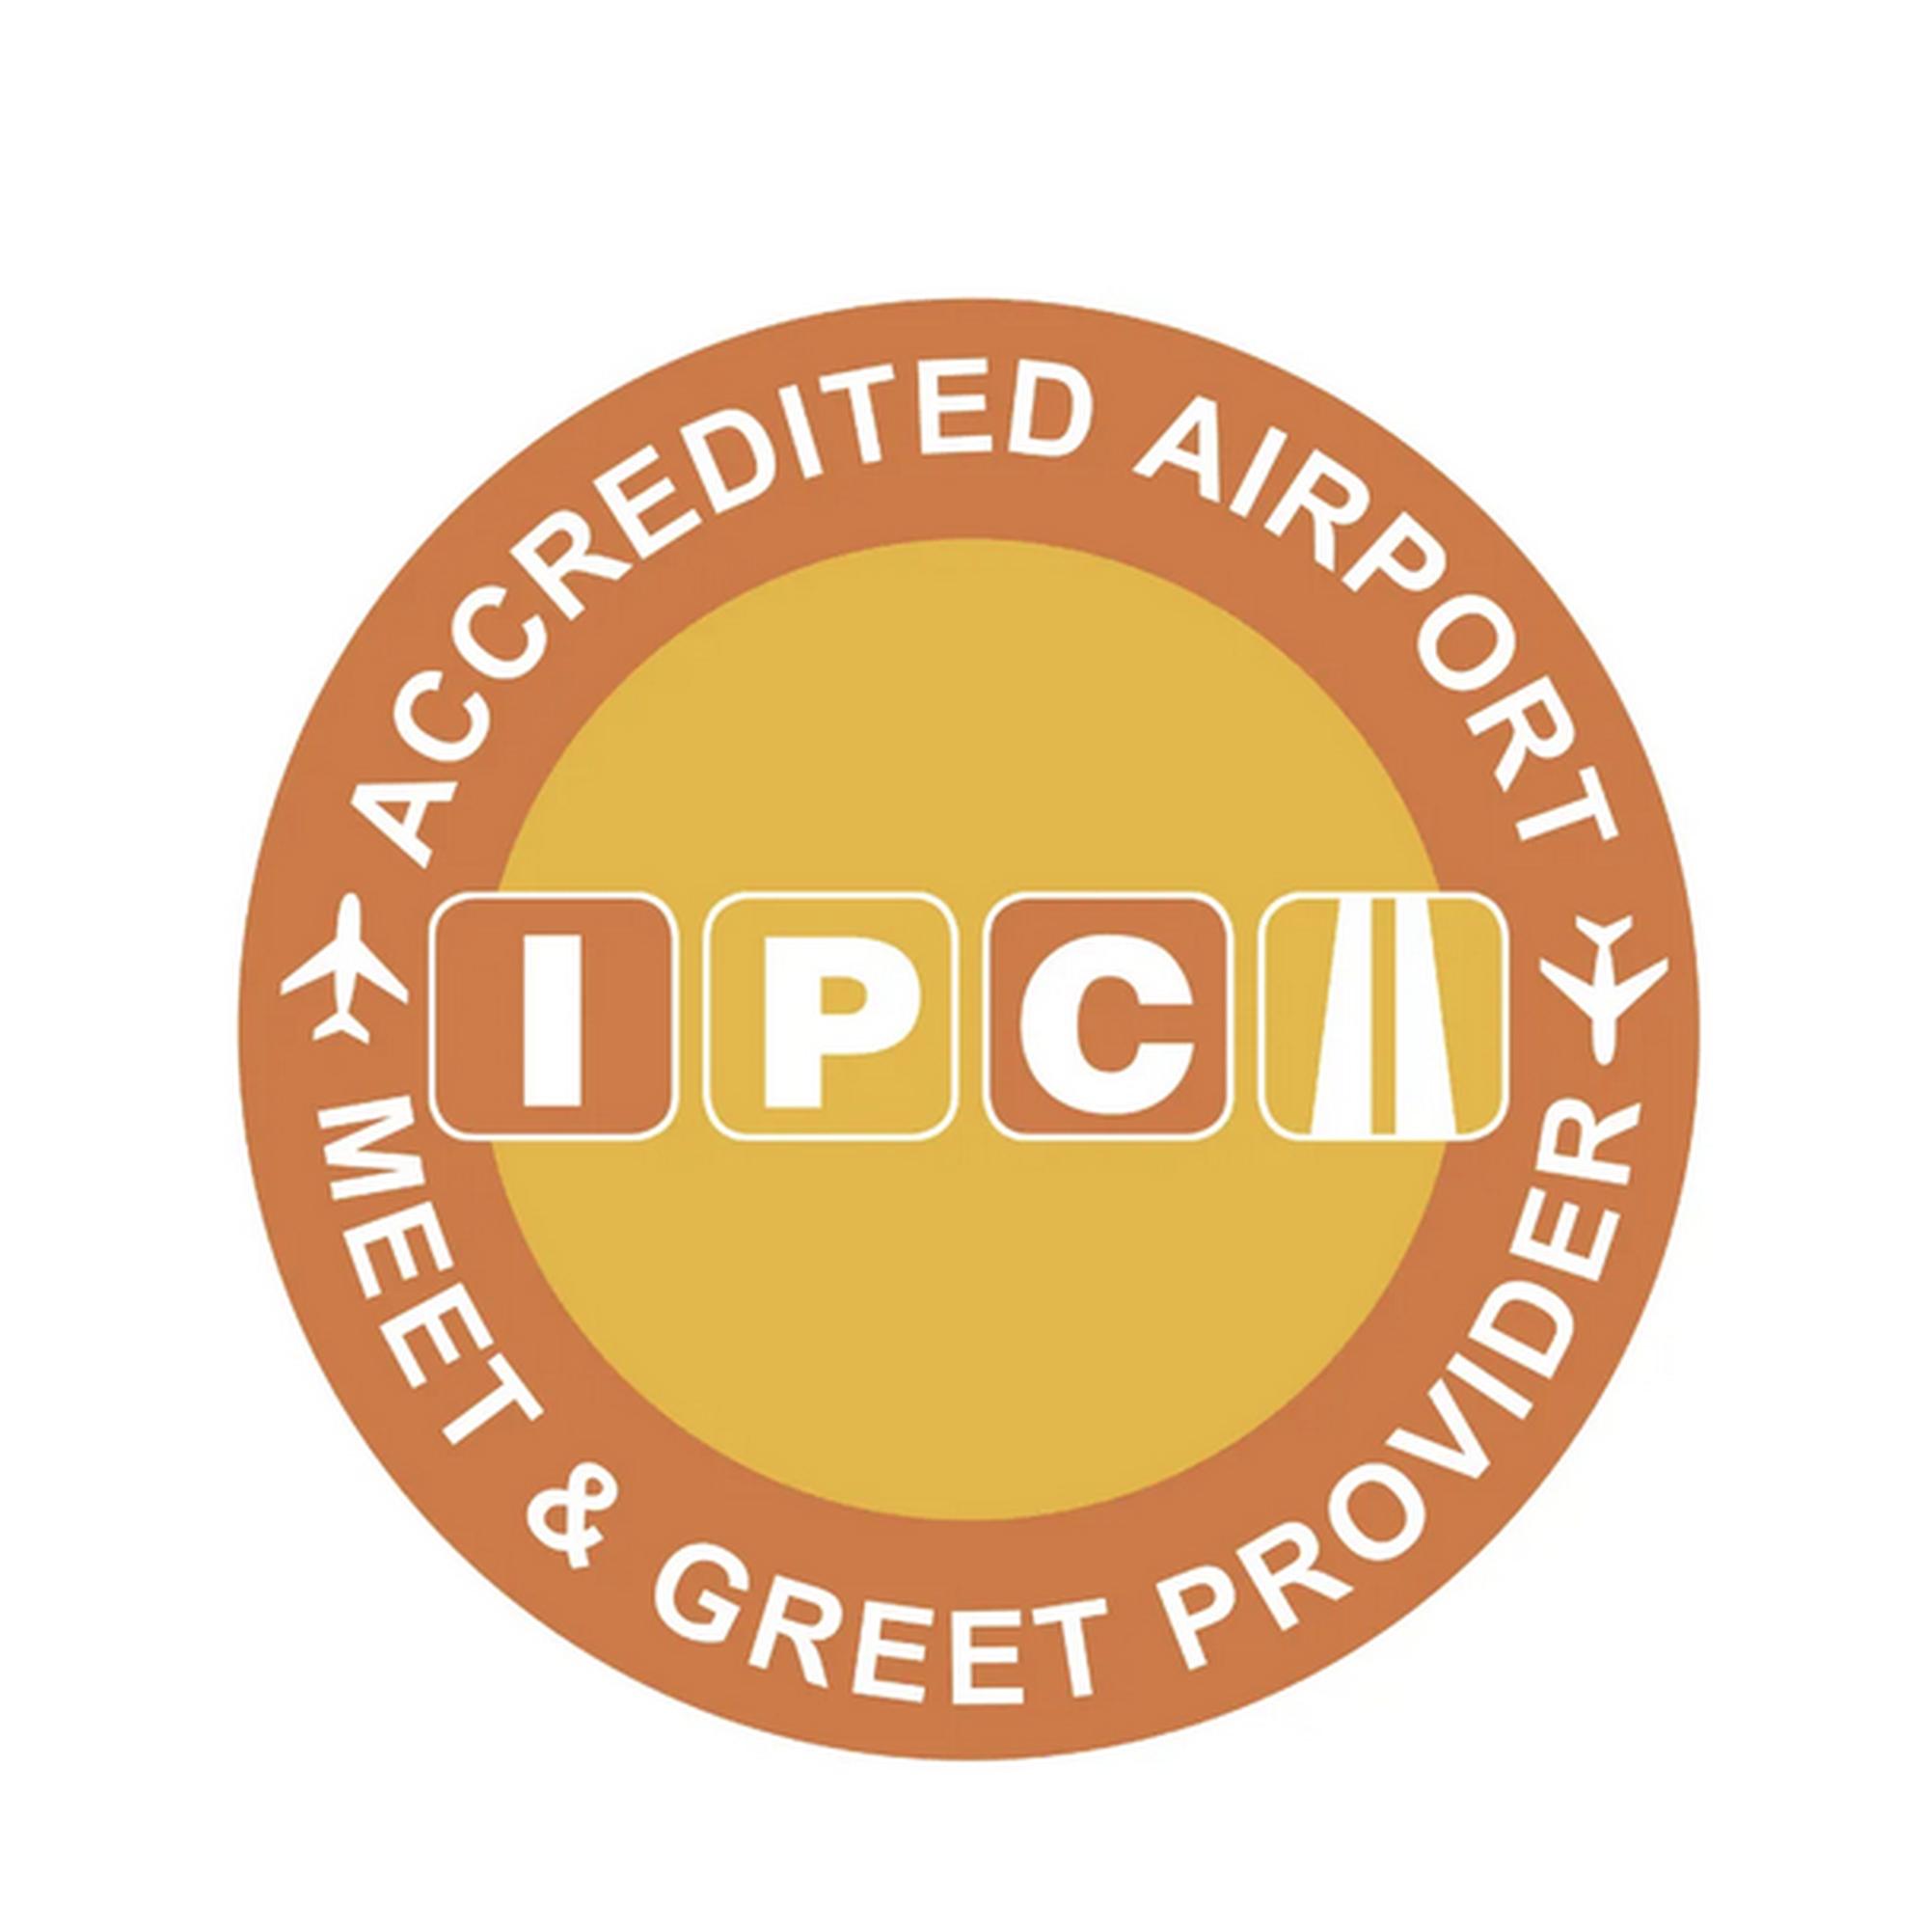 IPC launches meet & greet accreditation